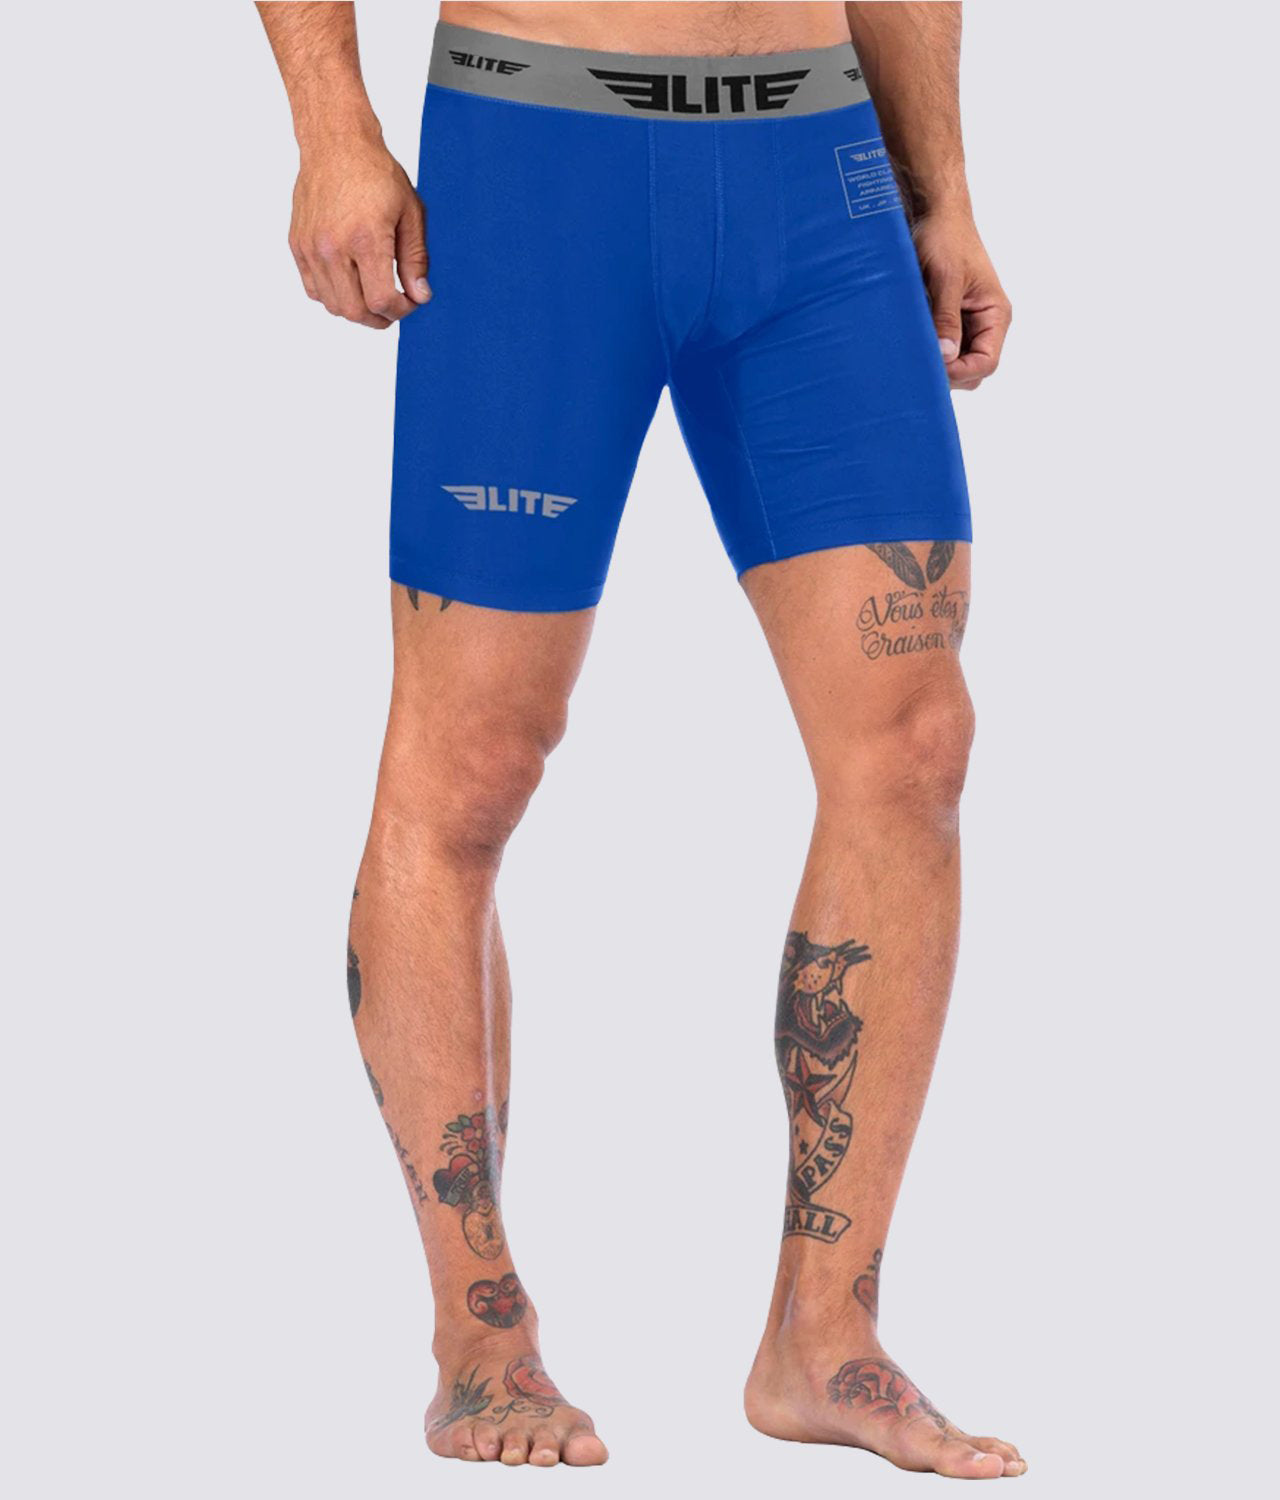 Adults' Blue Compression Muay Thai Shorts